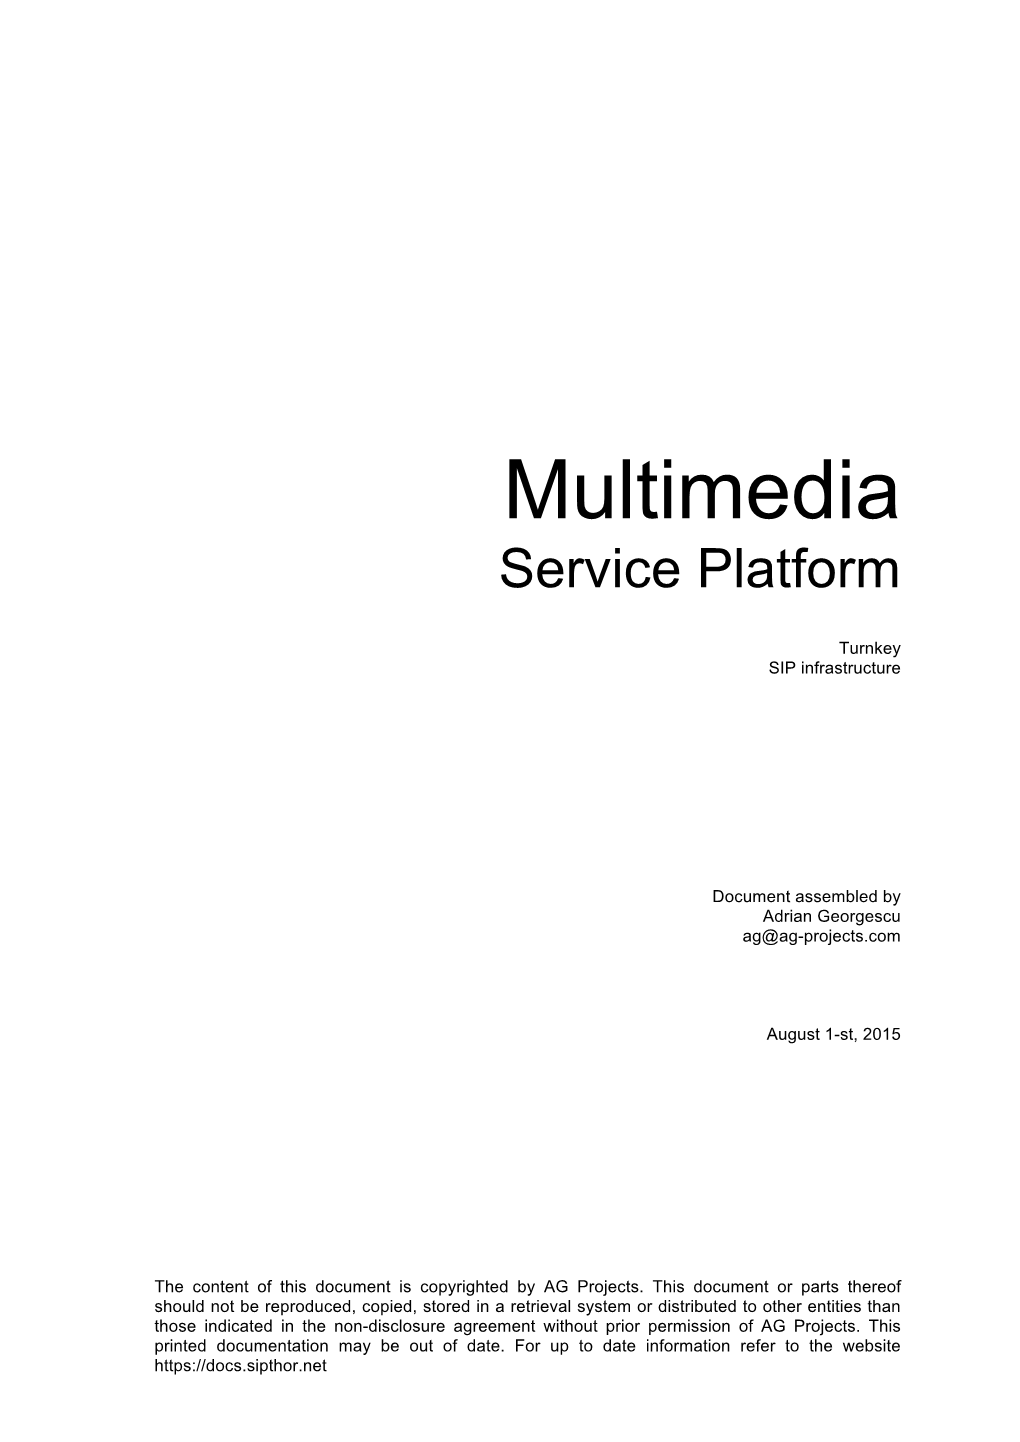 Multimedia Service Platform